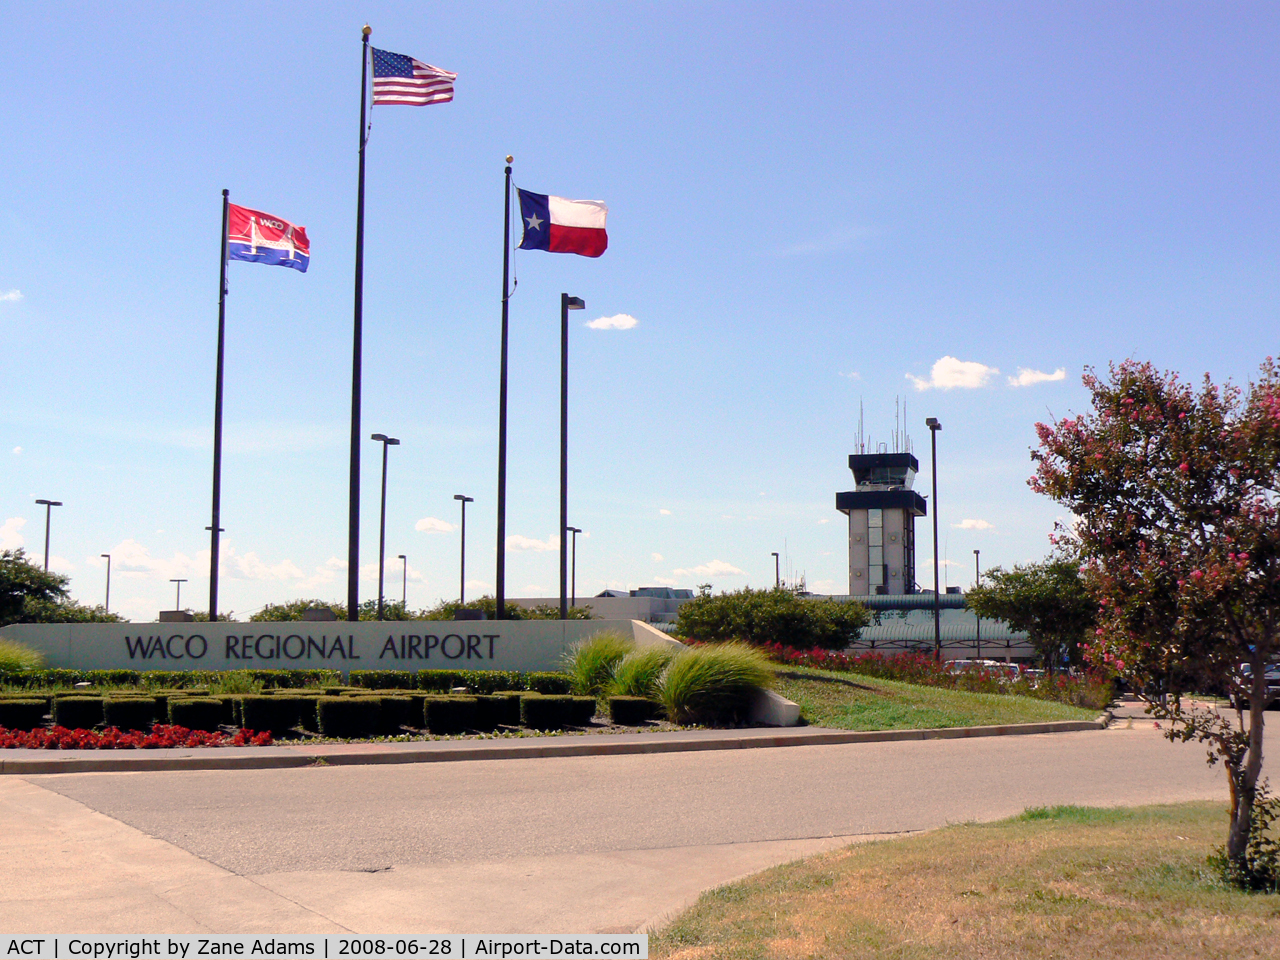 Waco Regional Airport (ACT) - Tower and terminal at Waco Regional 